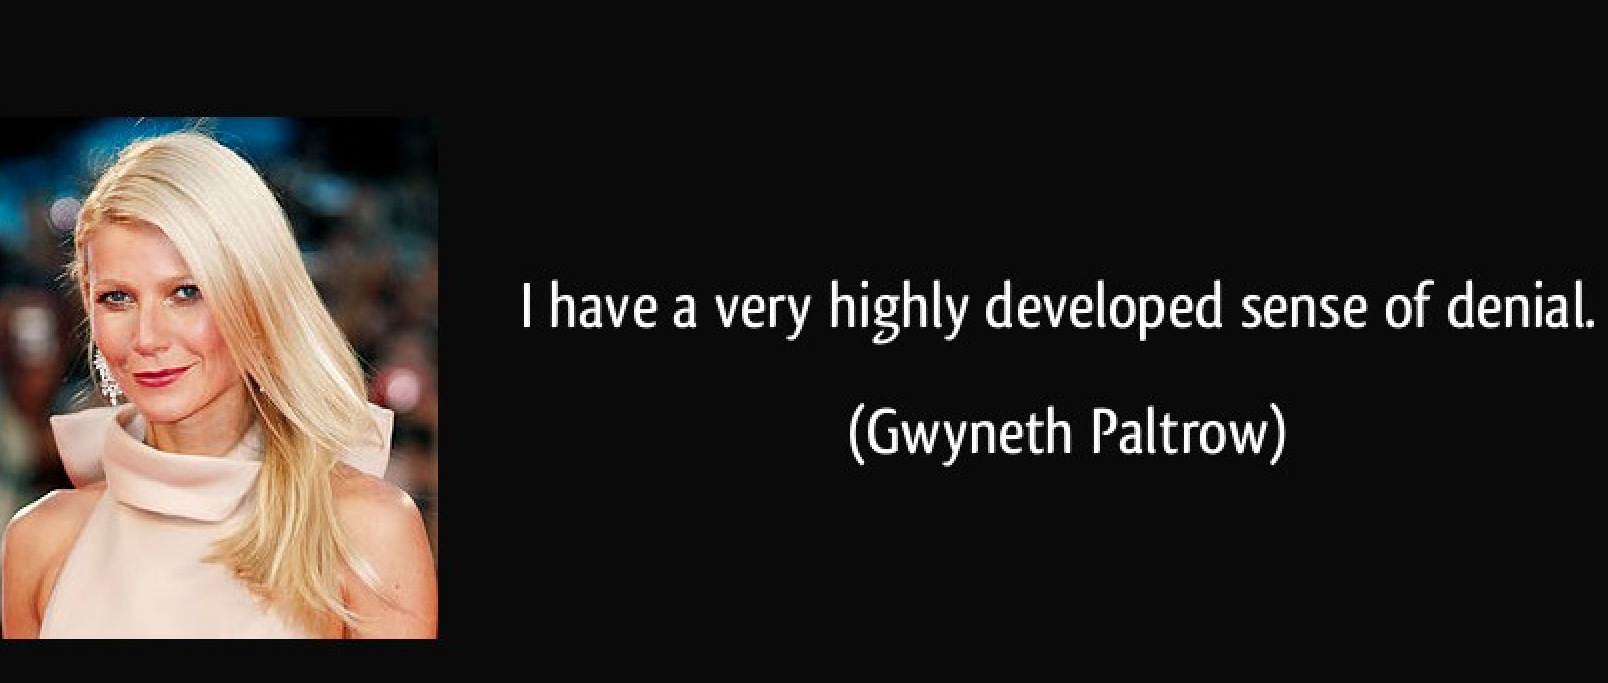 Insane Gwyneth Paltrow Quotes - gwyneth paltrow quotes - I have a very highly developed sense of denial. Gwyneth Paltrow